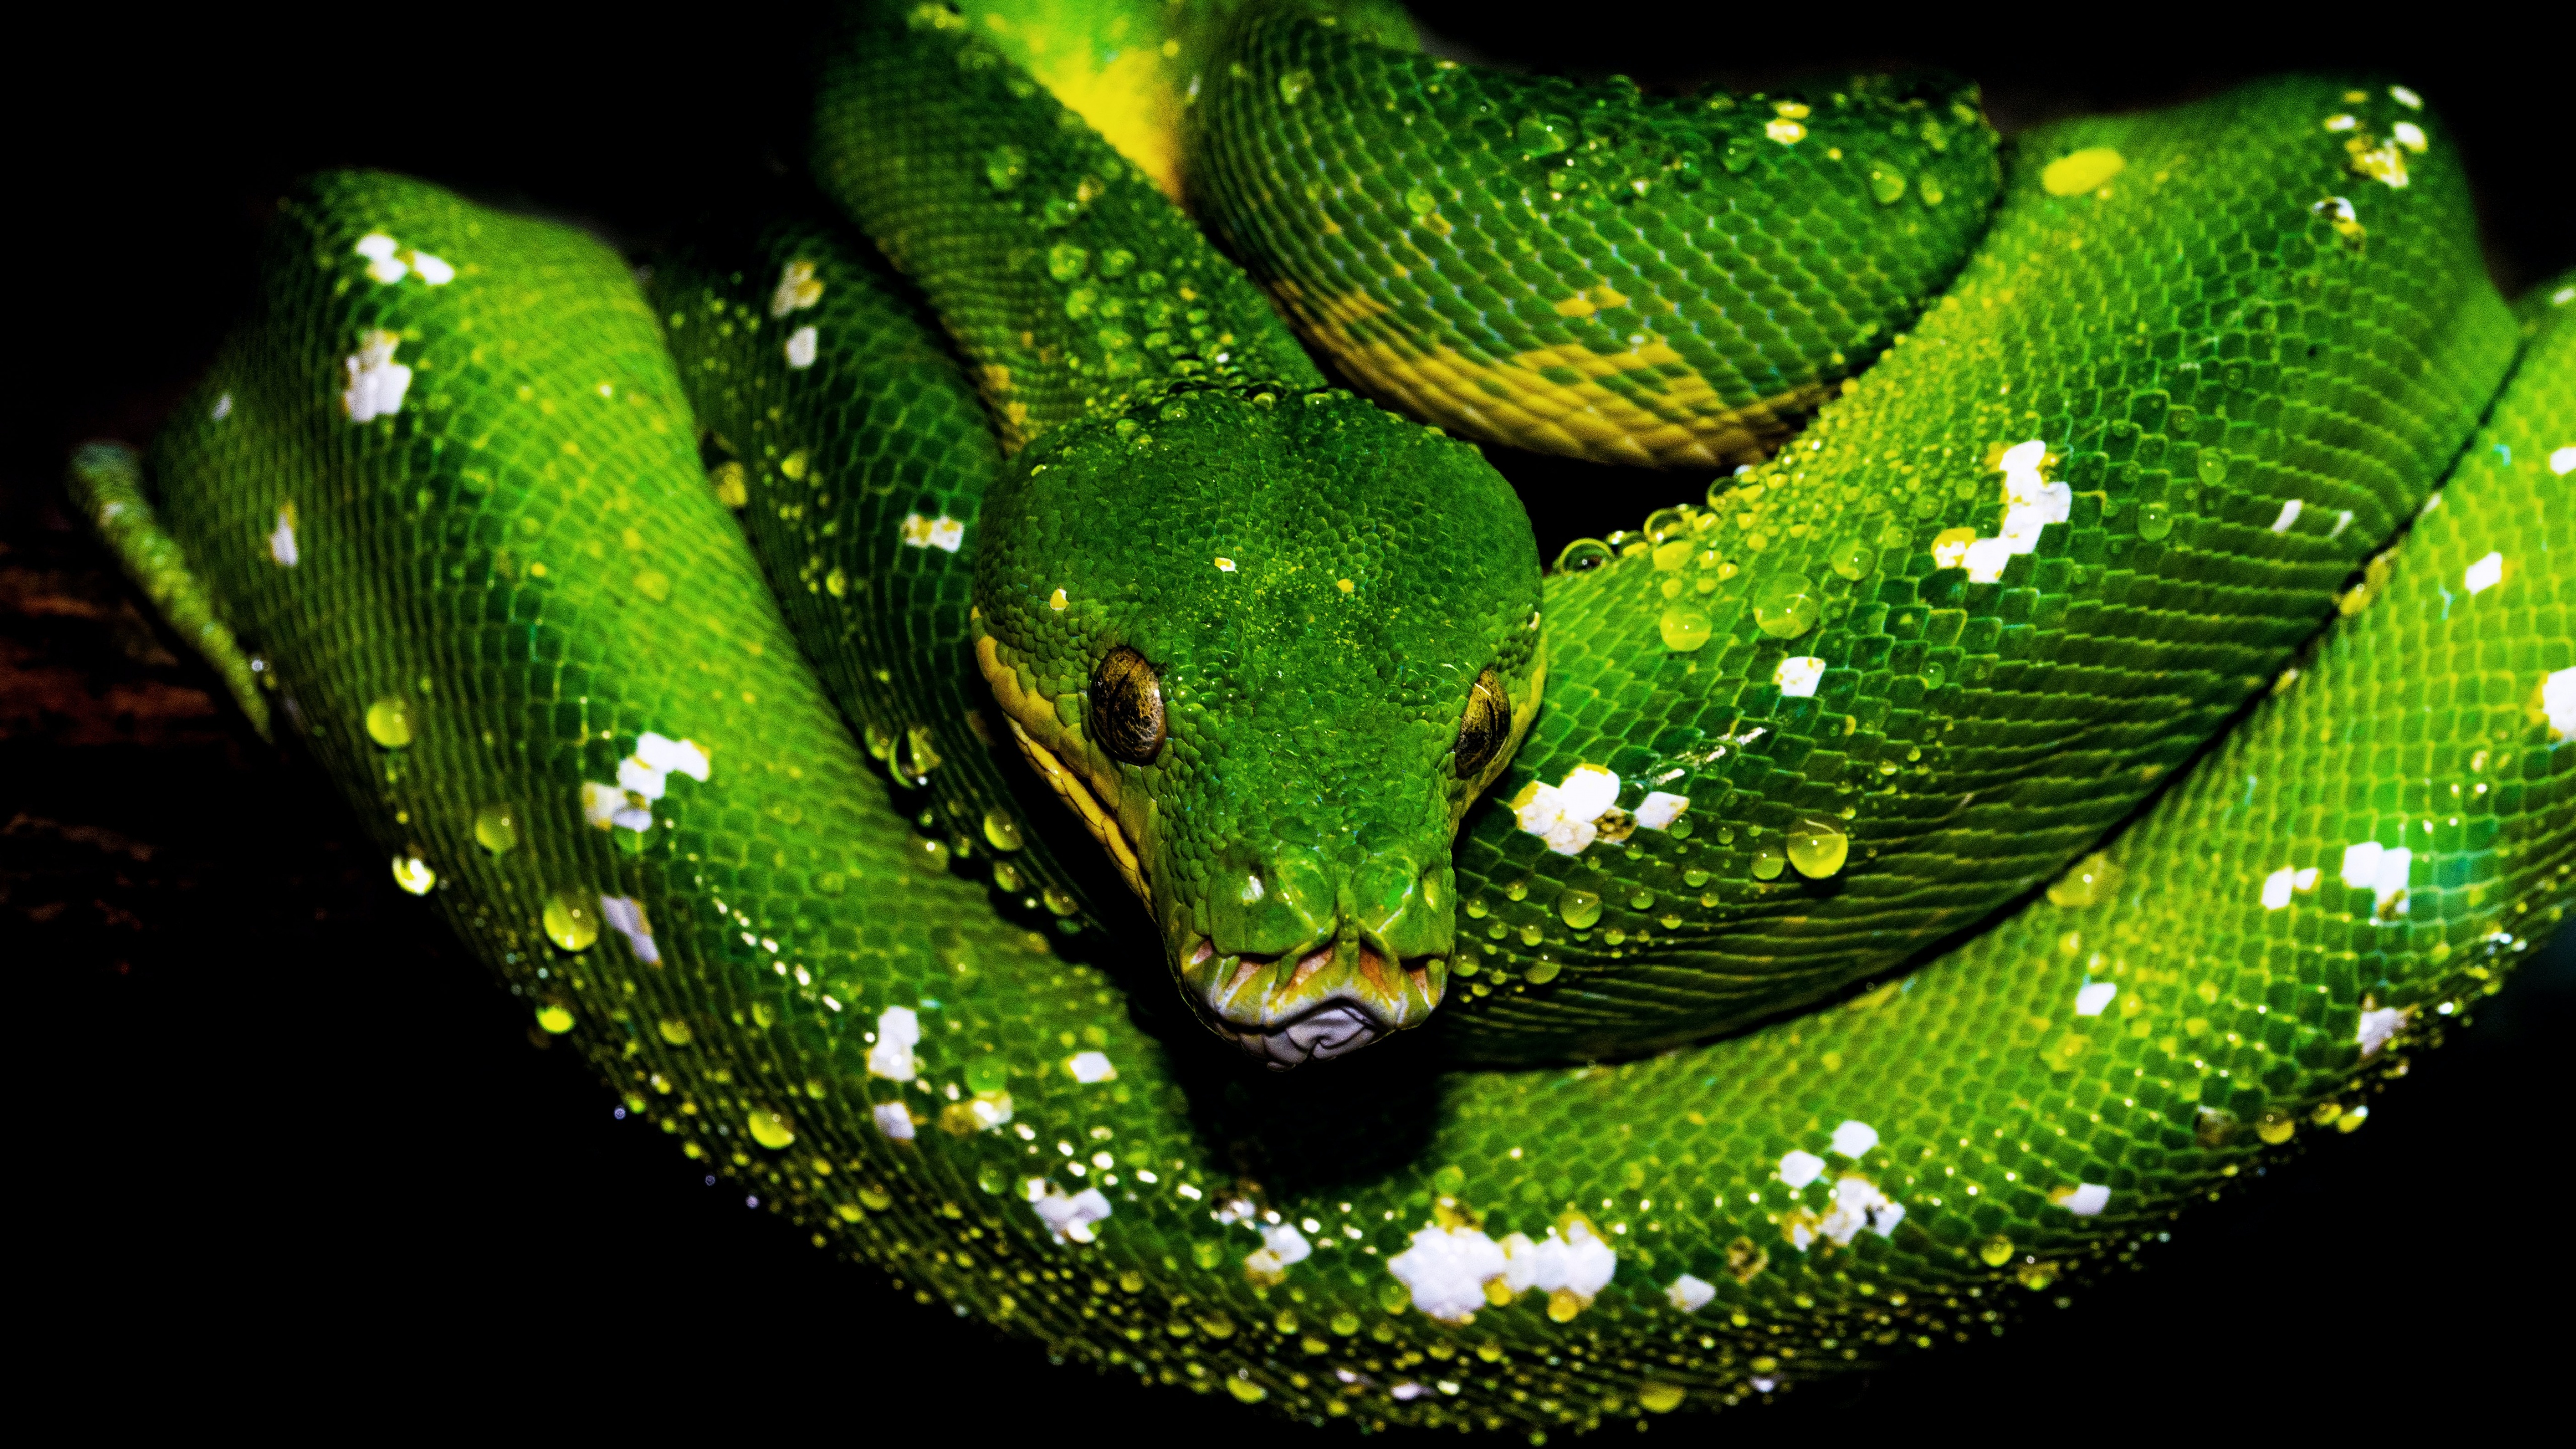 Tree Python Wallpaper 4K, Green snake, Green Python, Water drops, Animals